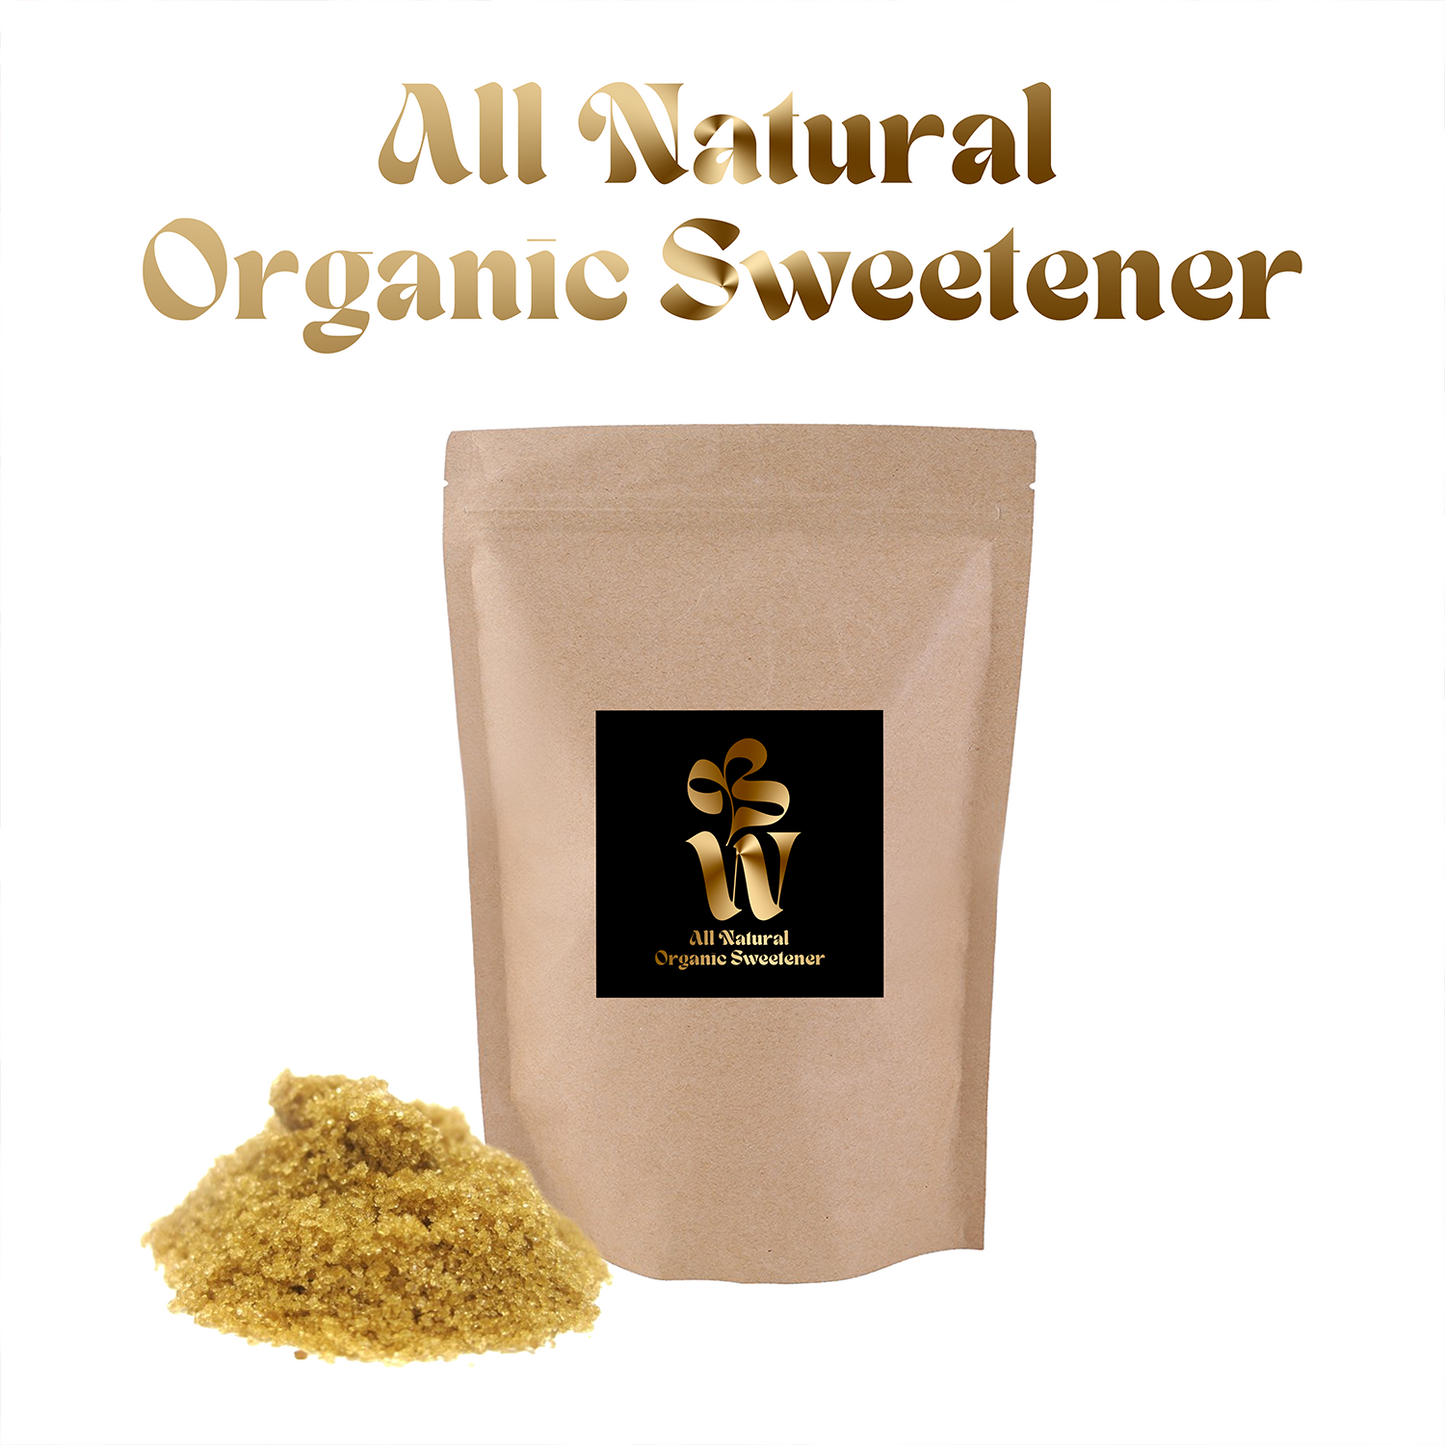 All Organic Sweetener